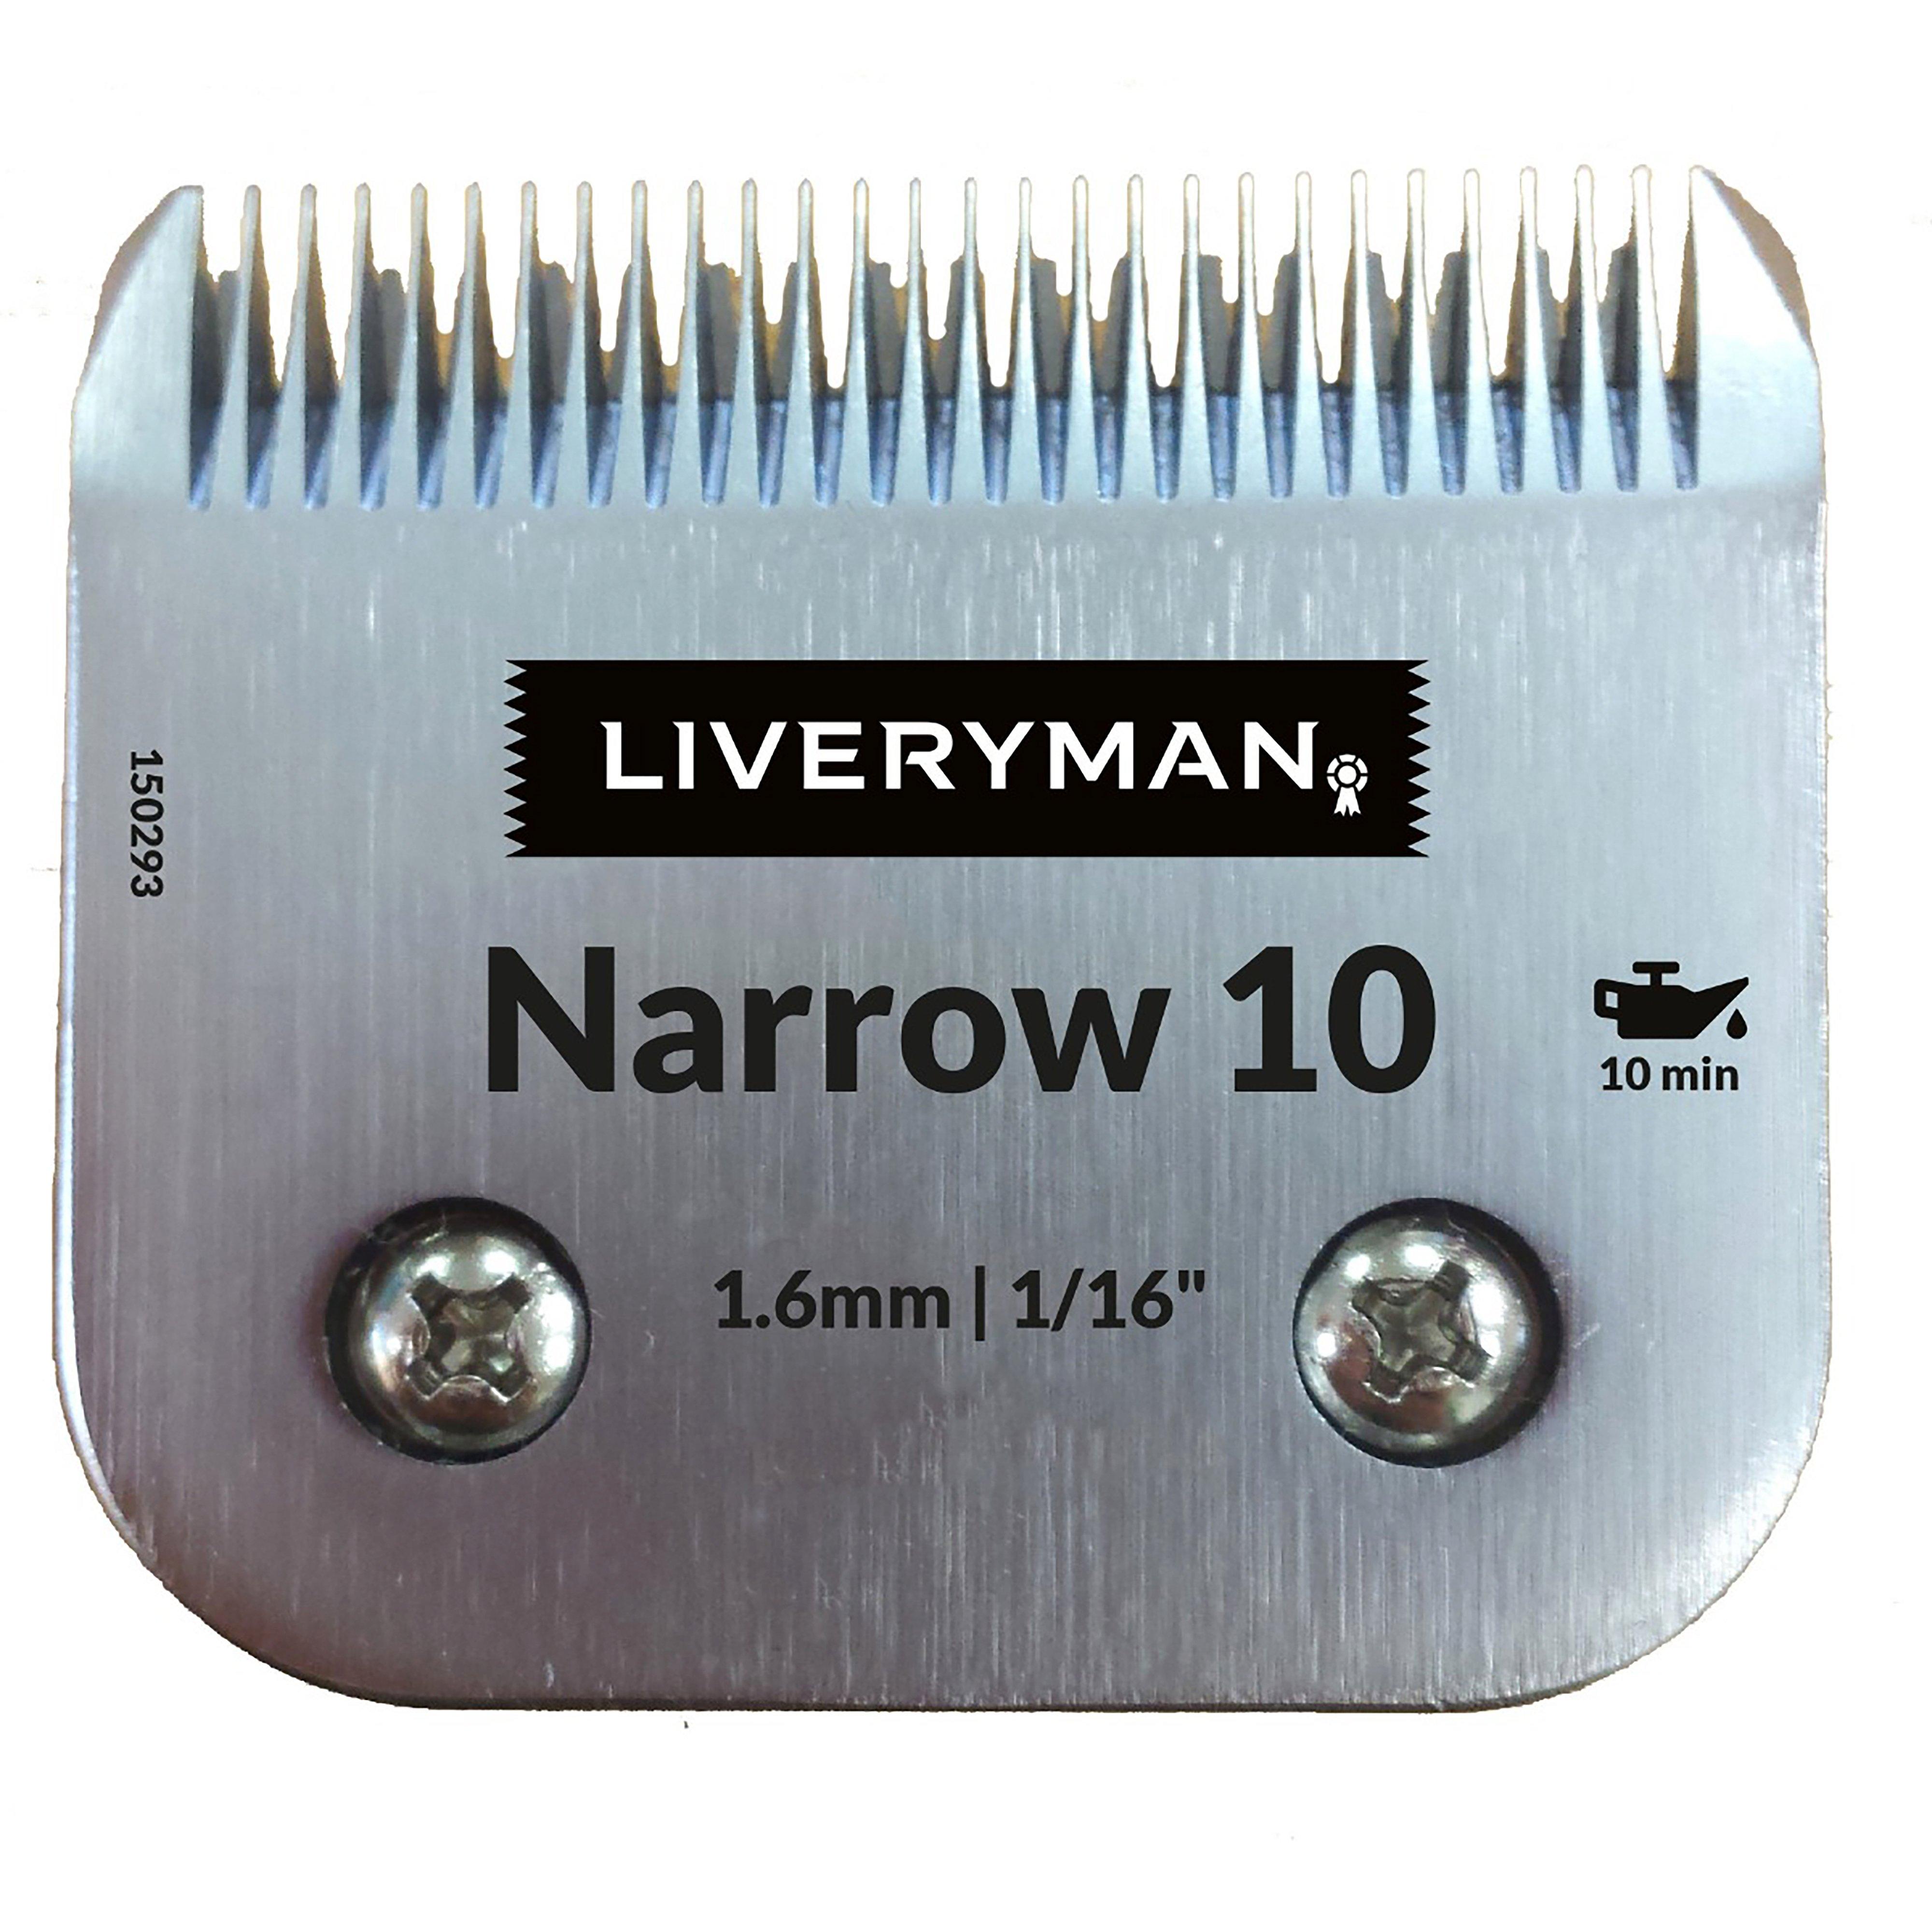 A5 Narrow 10 1.6mm Blade